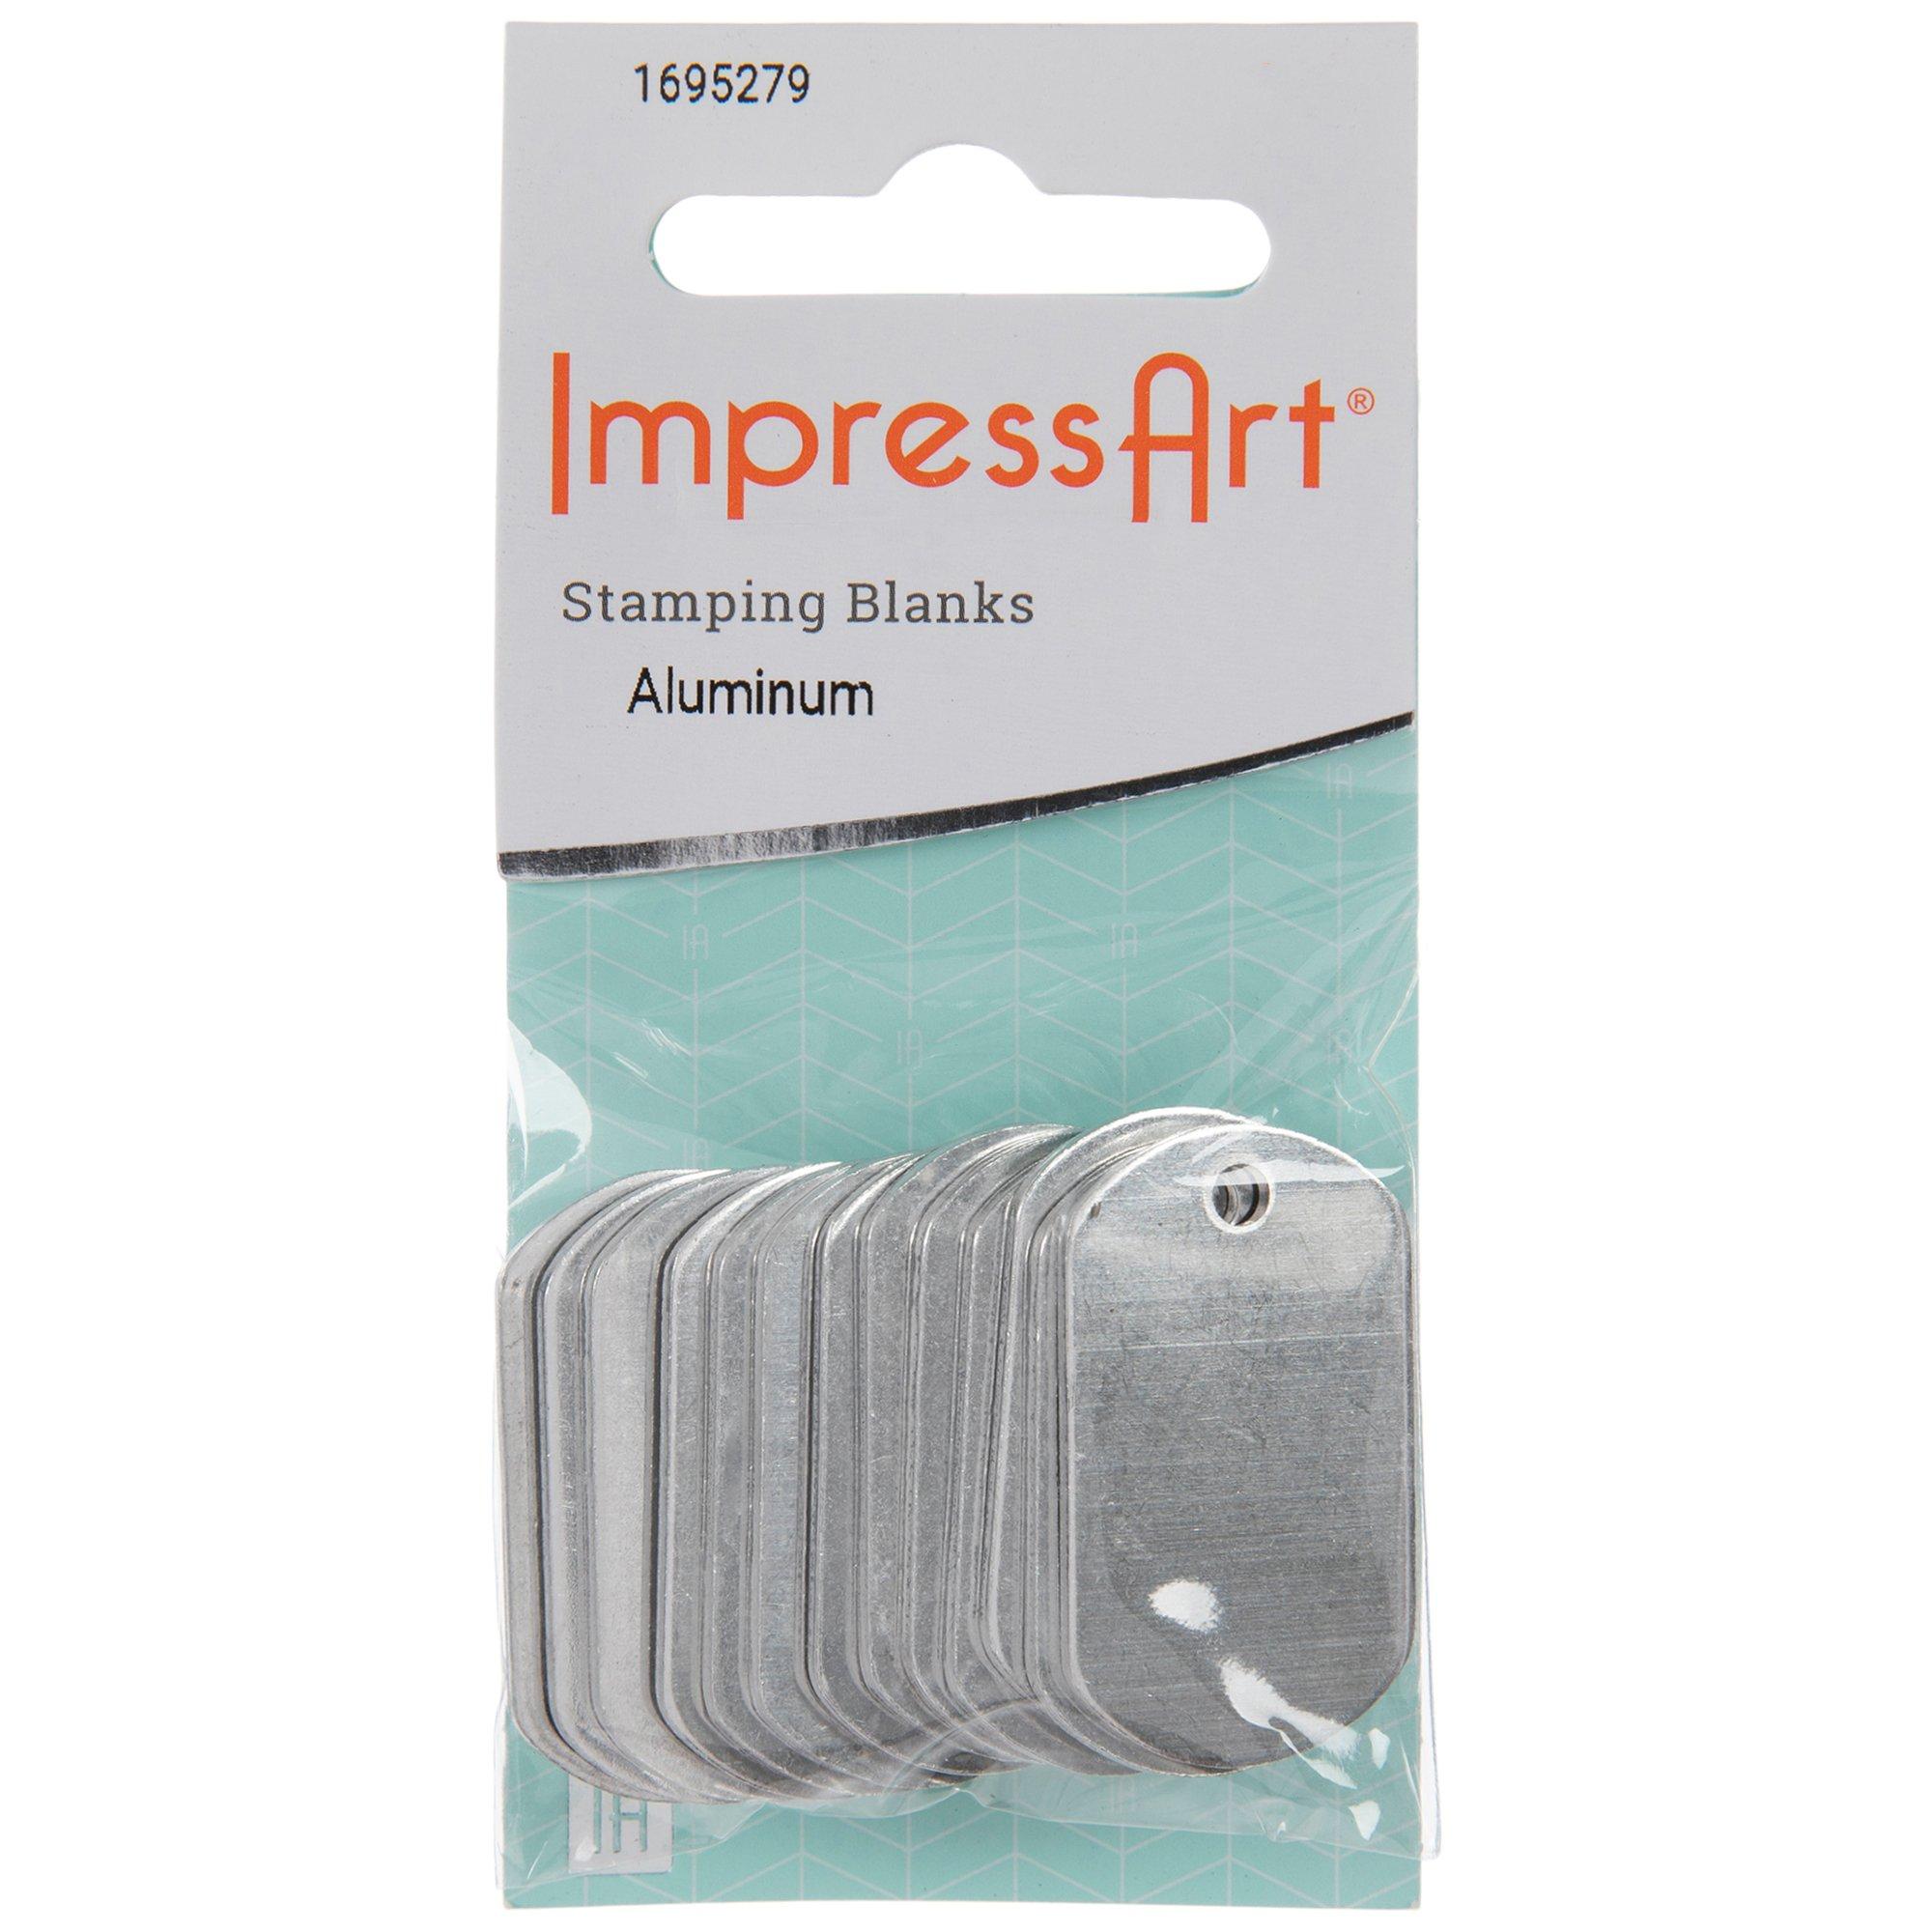 ImpressArt® Aluminum Dog Tag Stamping Blanks